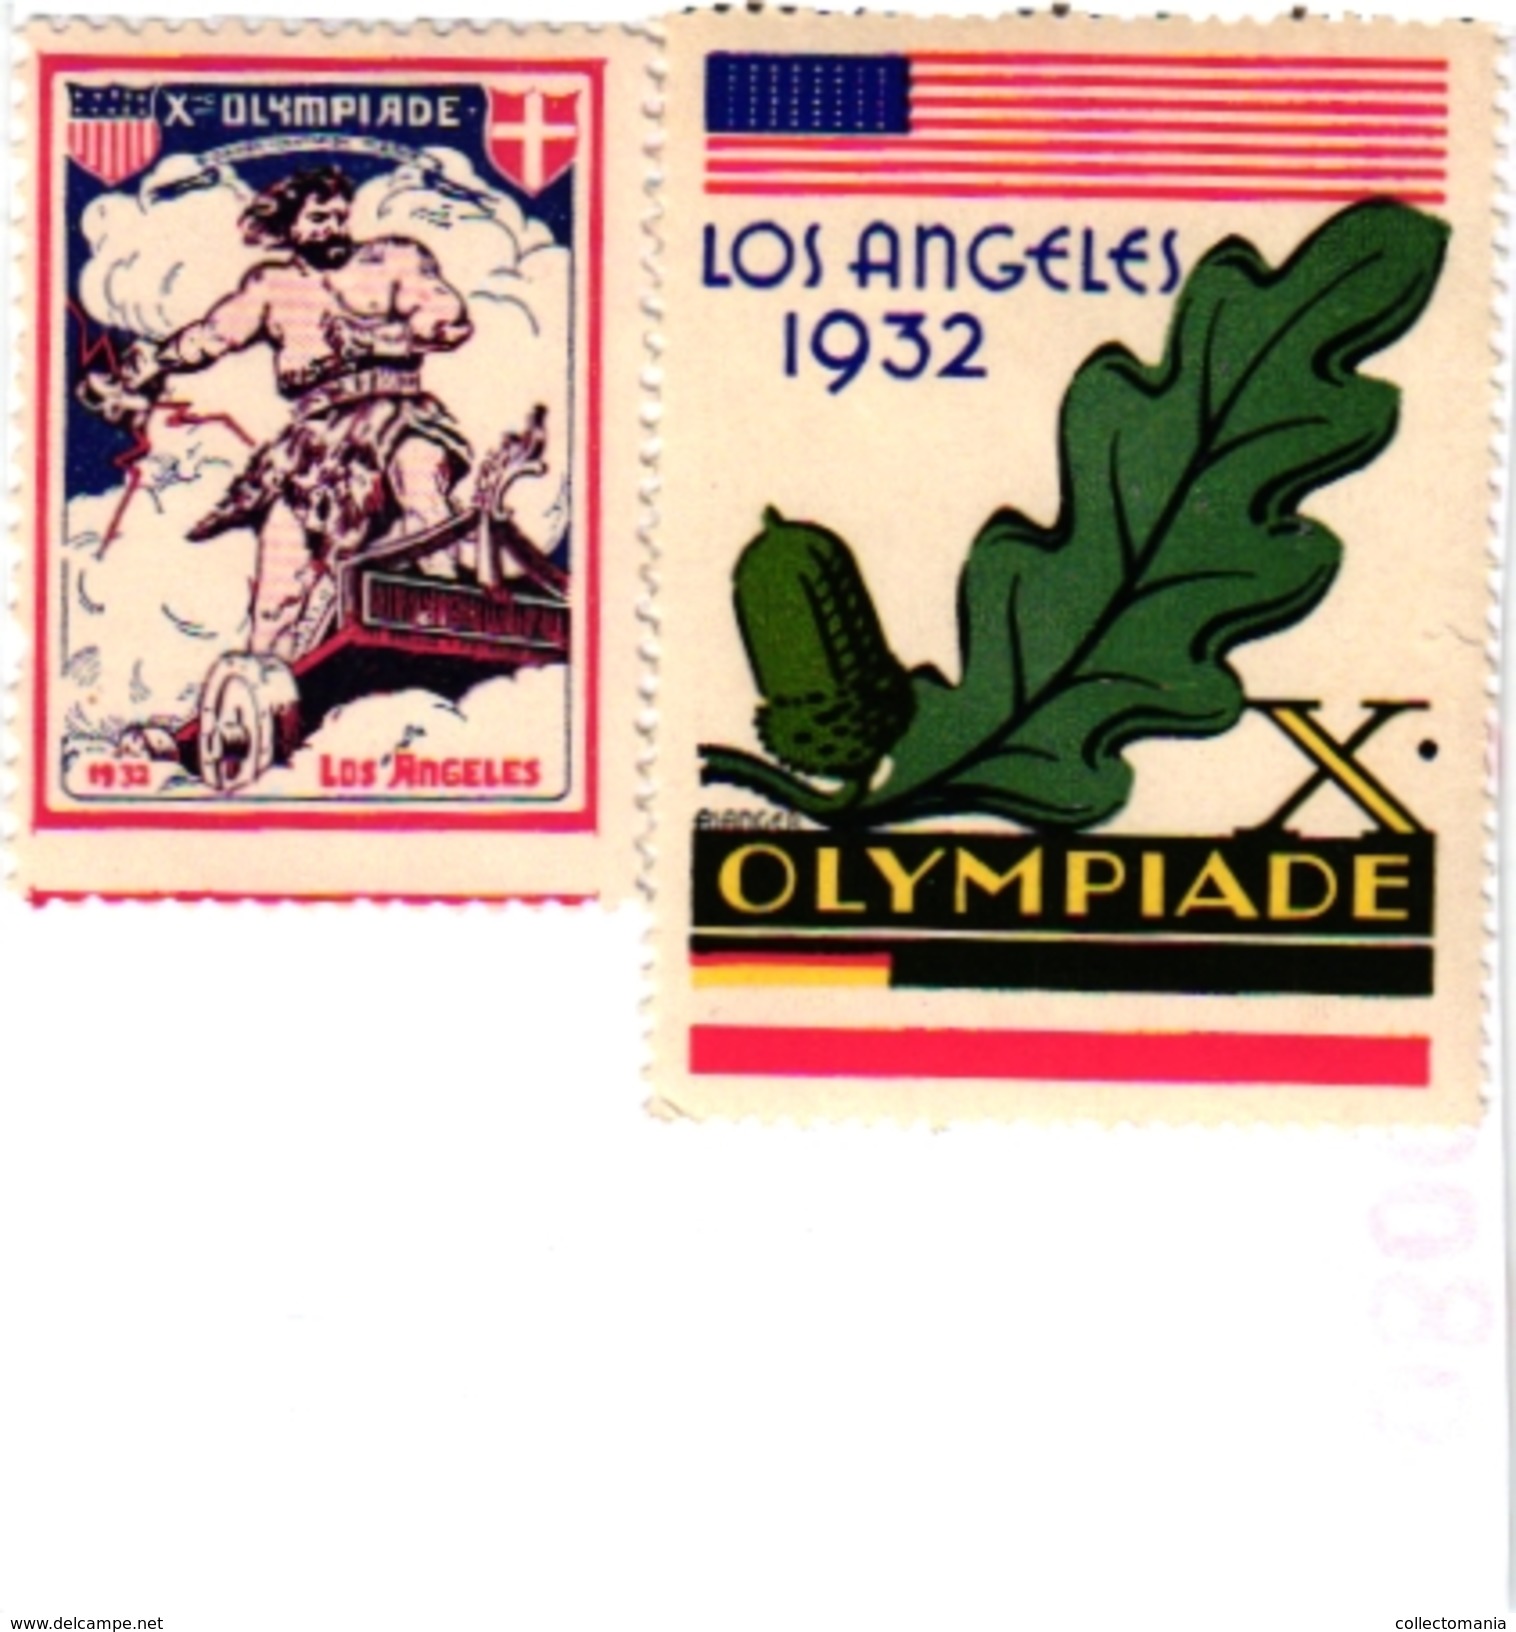 2 POSTER STAMPS Cinderella Olympiade LOS ANGELES 1932 - Summer 1932: Los Angeles